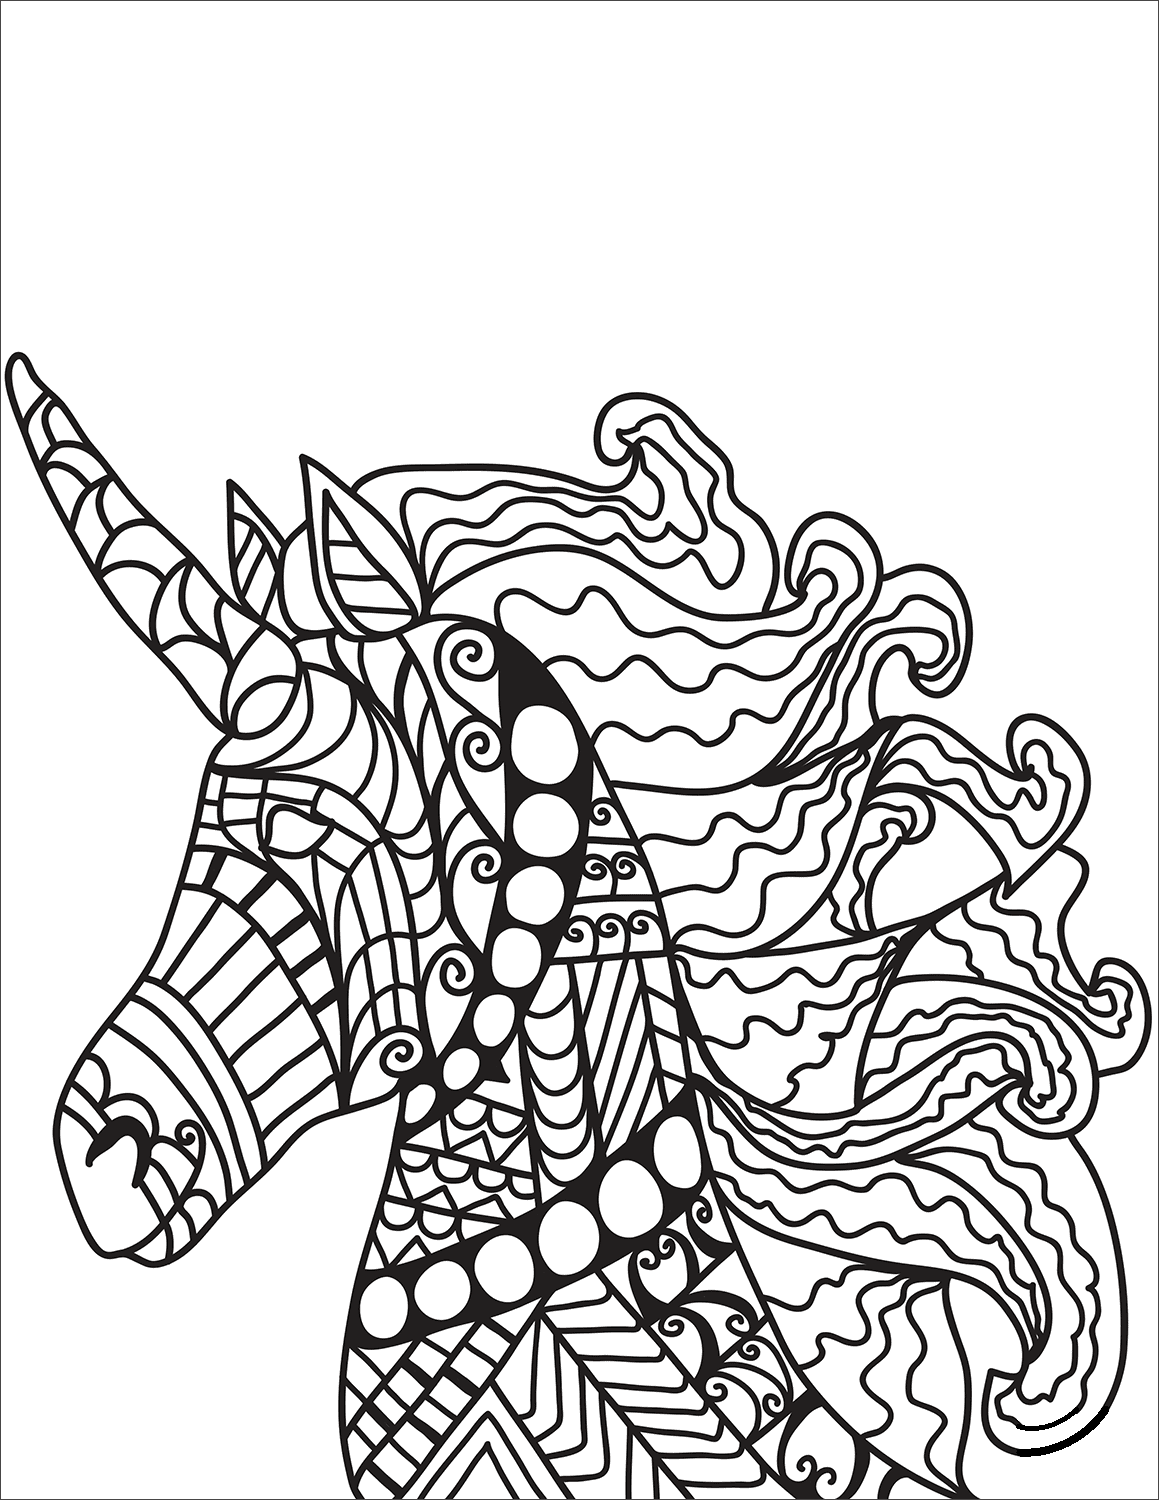 Dibujos de Unicornio Zentangle para colorear